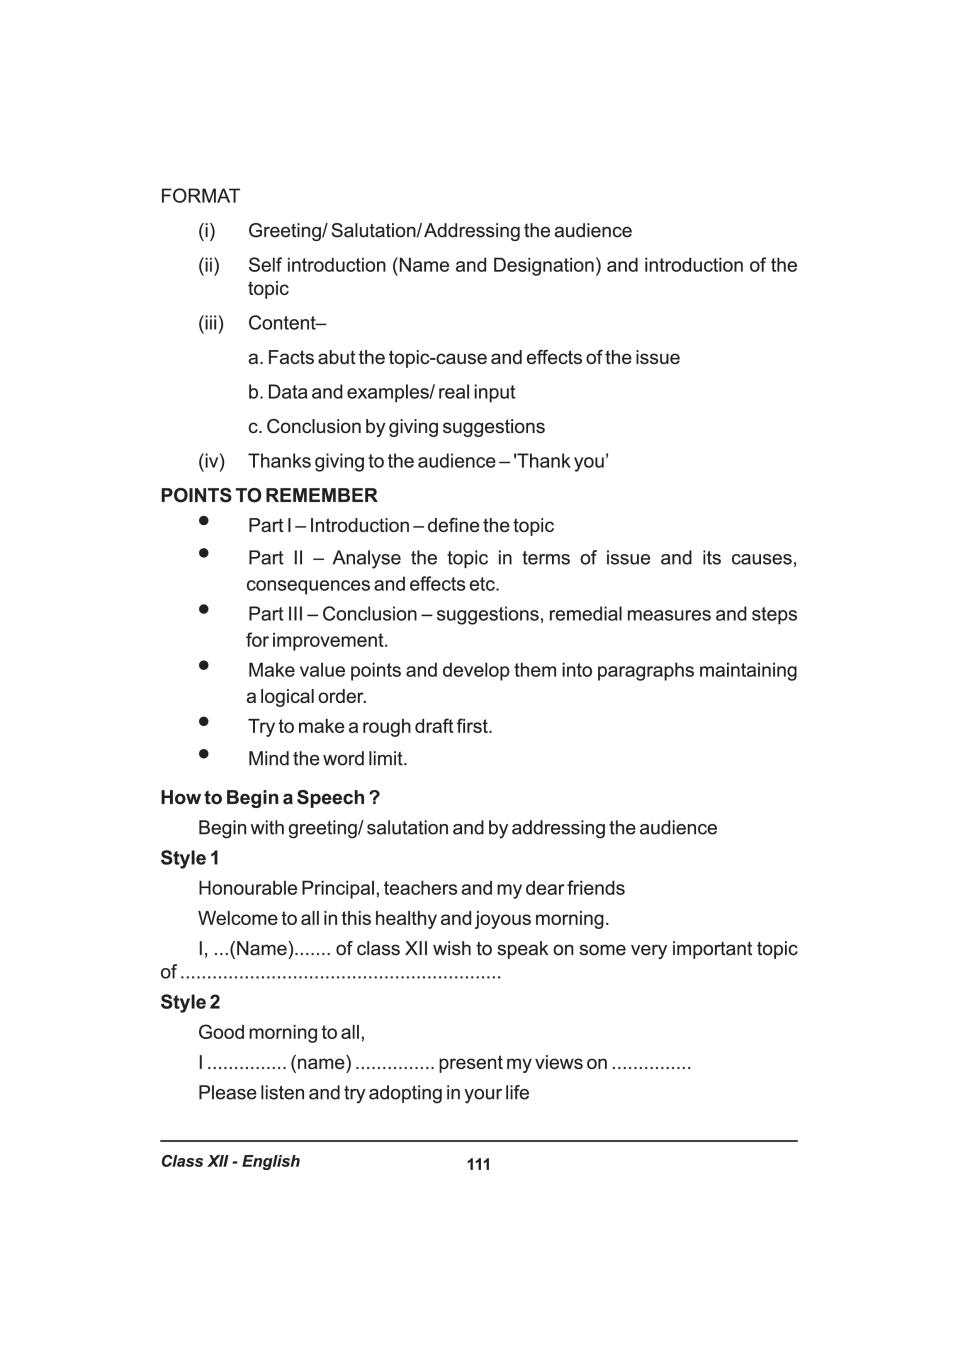 Class 19 English Speech Writing Format